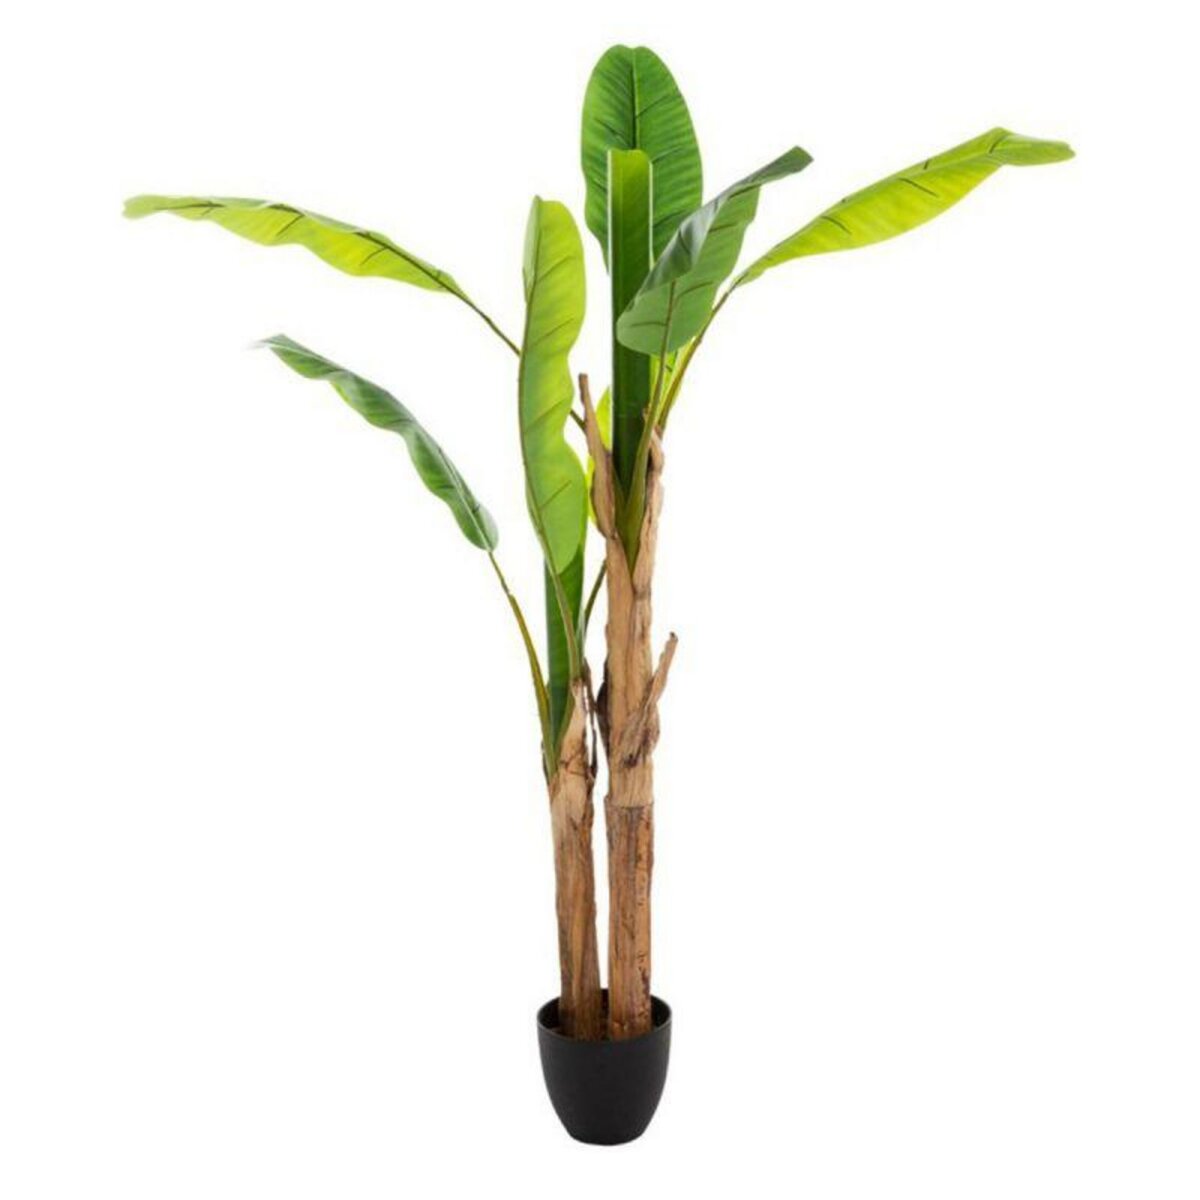  Plante Artificielle  Bananier Double  160cm Vert